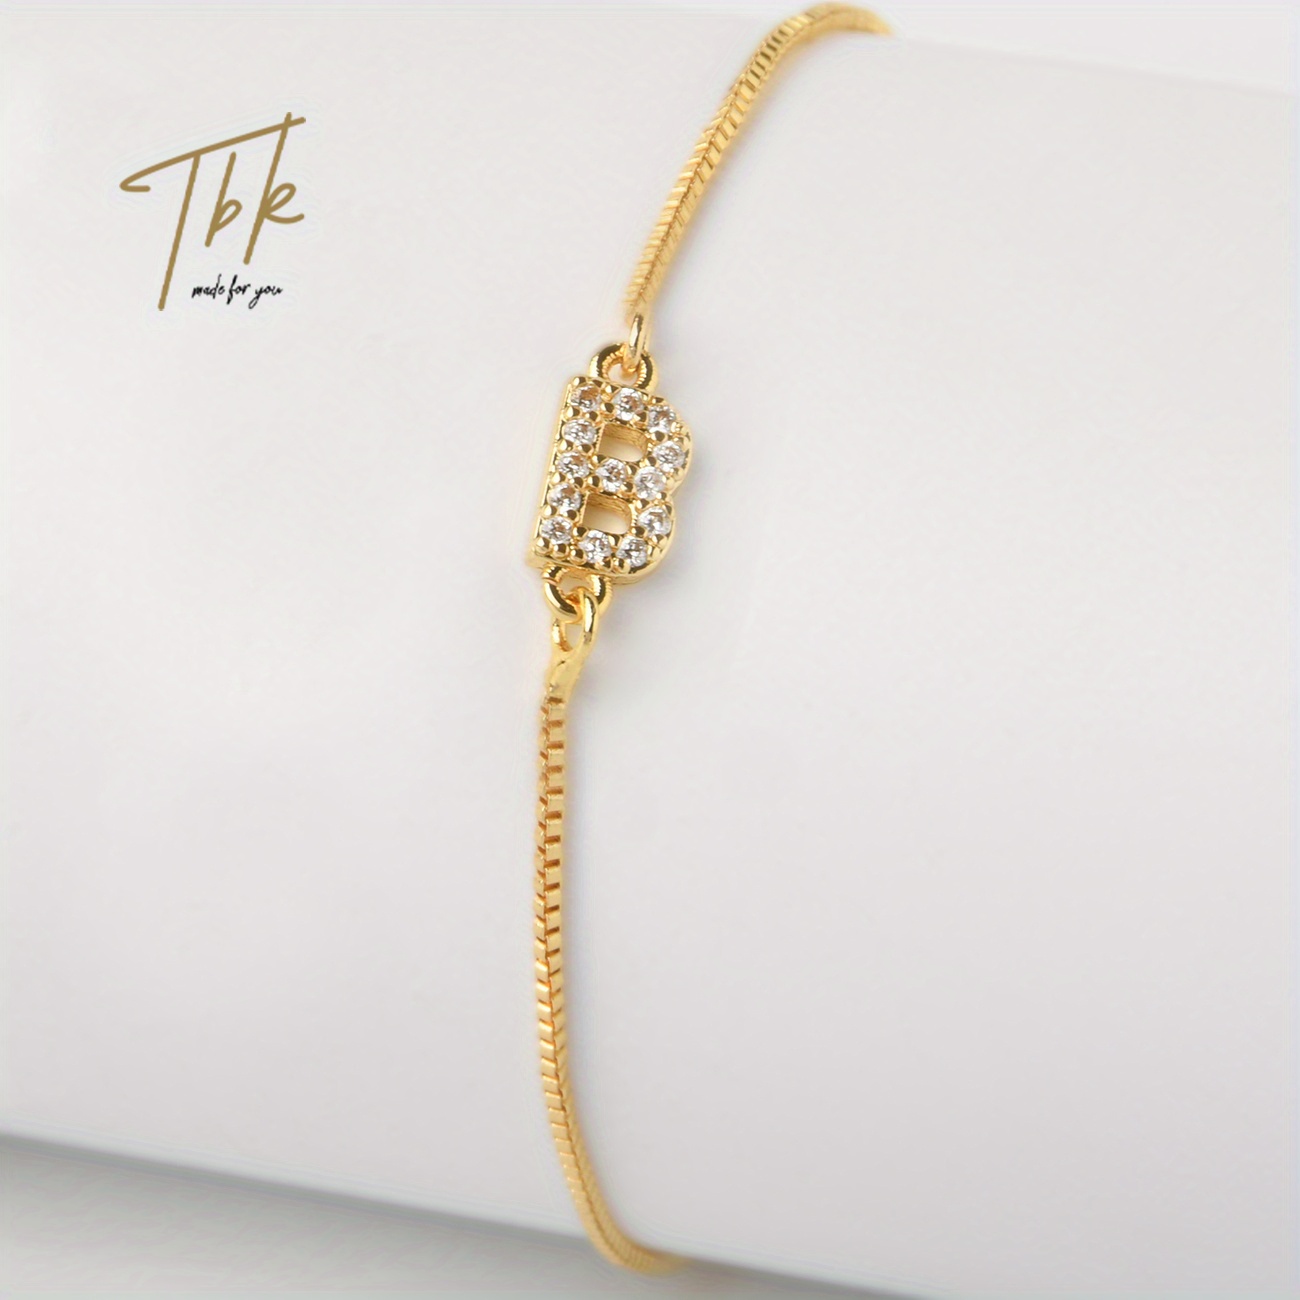 Gold Bracelet Jewelry Design Girls